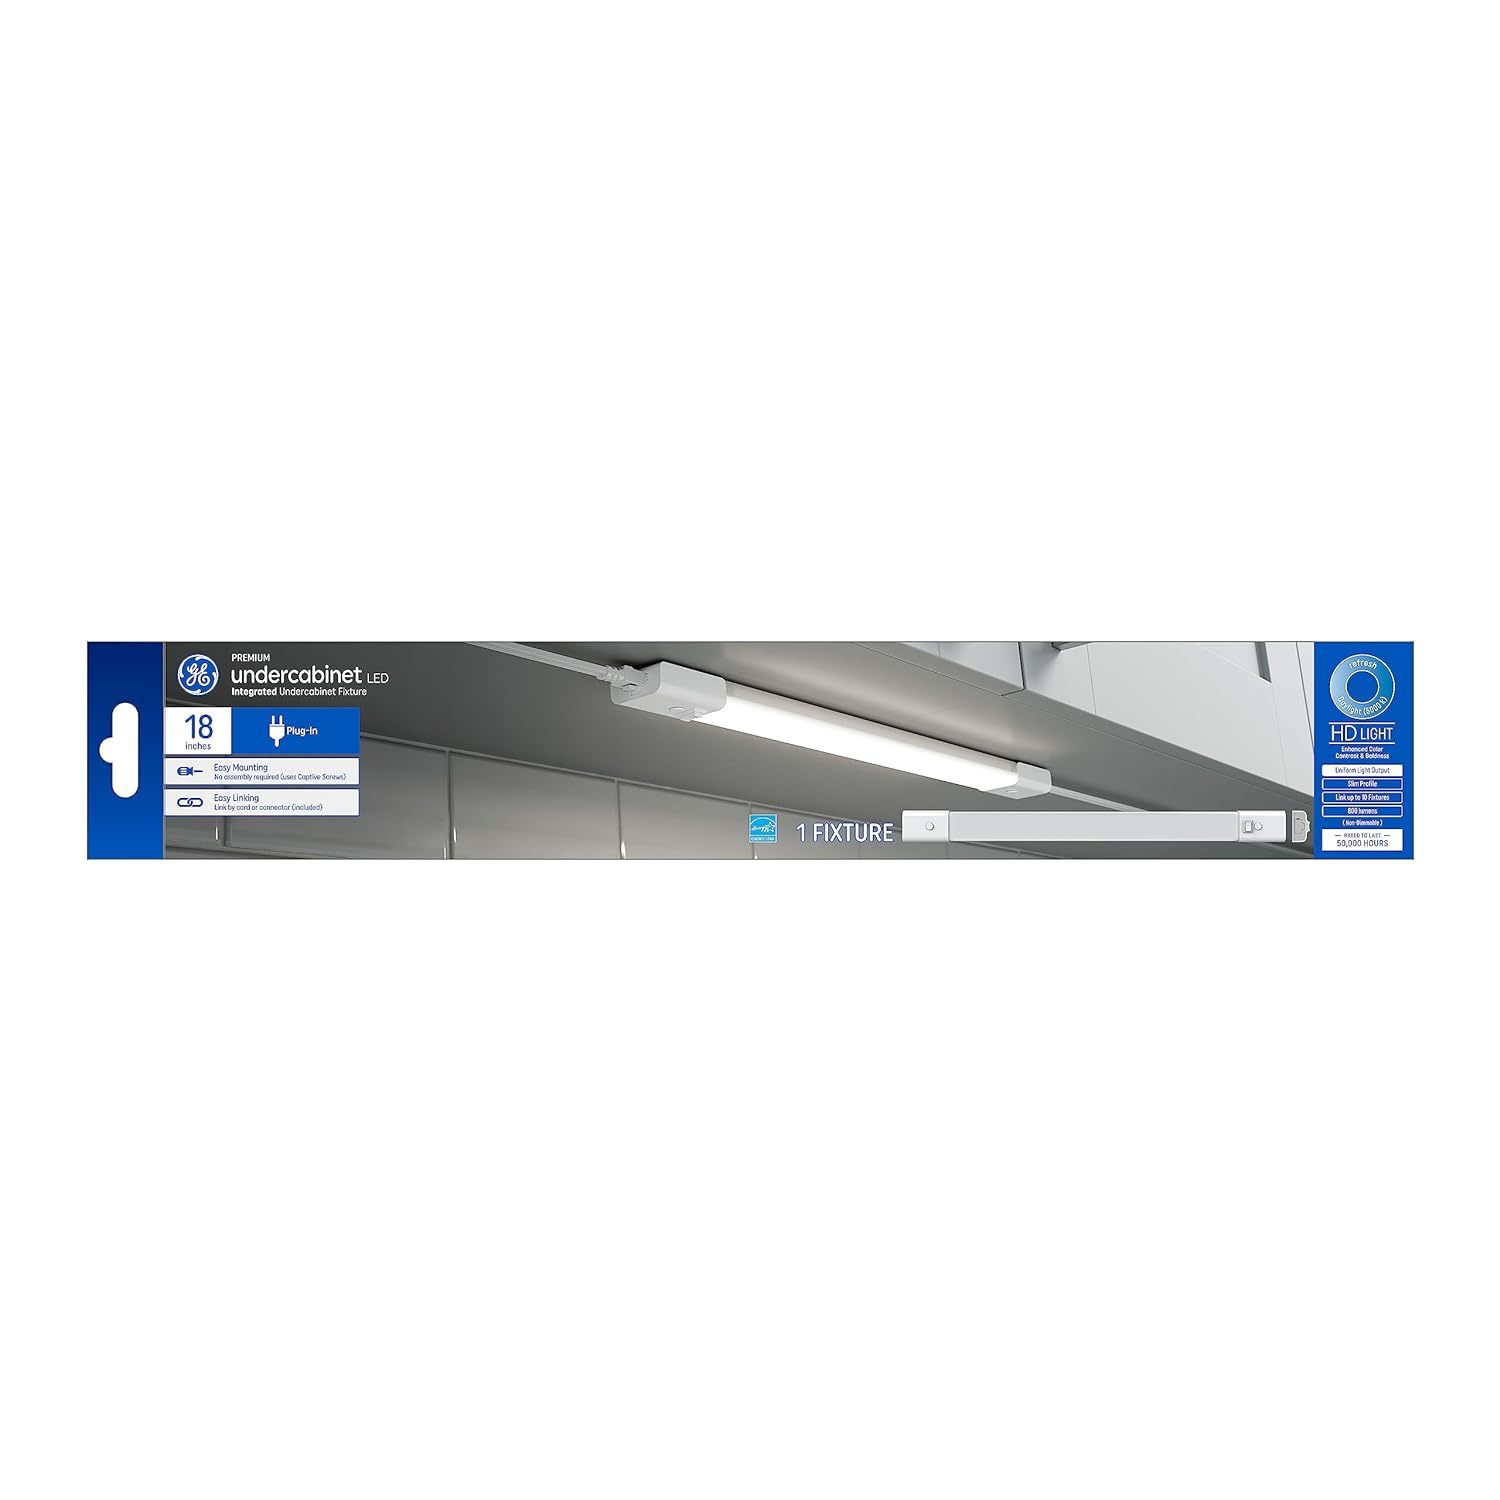 GE LED Undercabinet Light Fixture, Linkable Integrated Plug-In Light Fixture, Da - $30.99